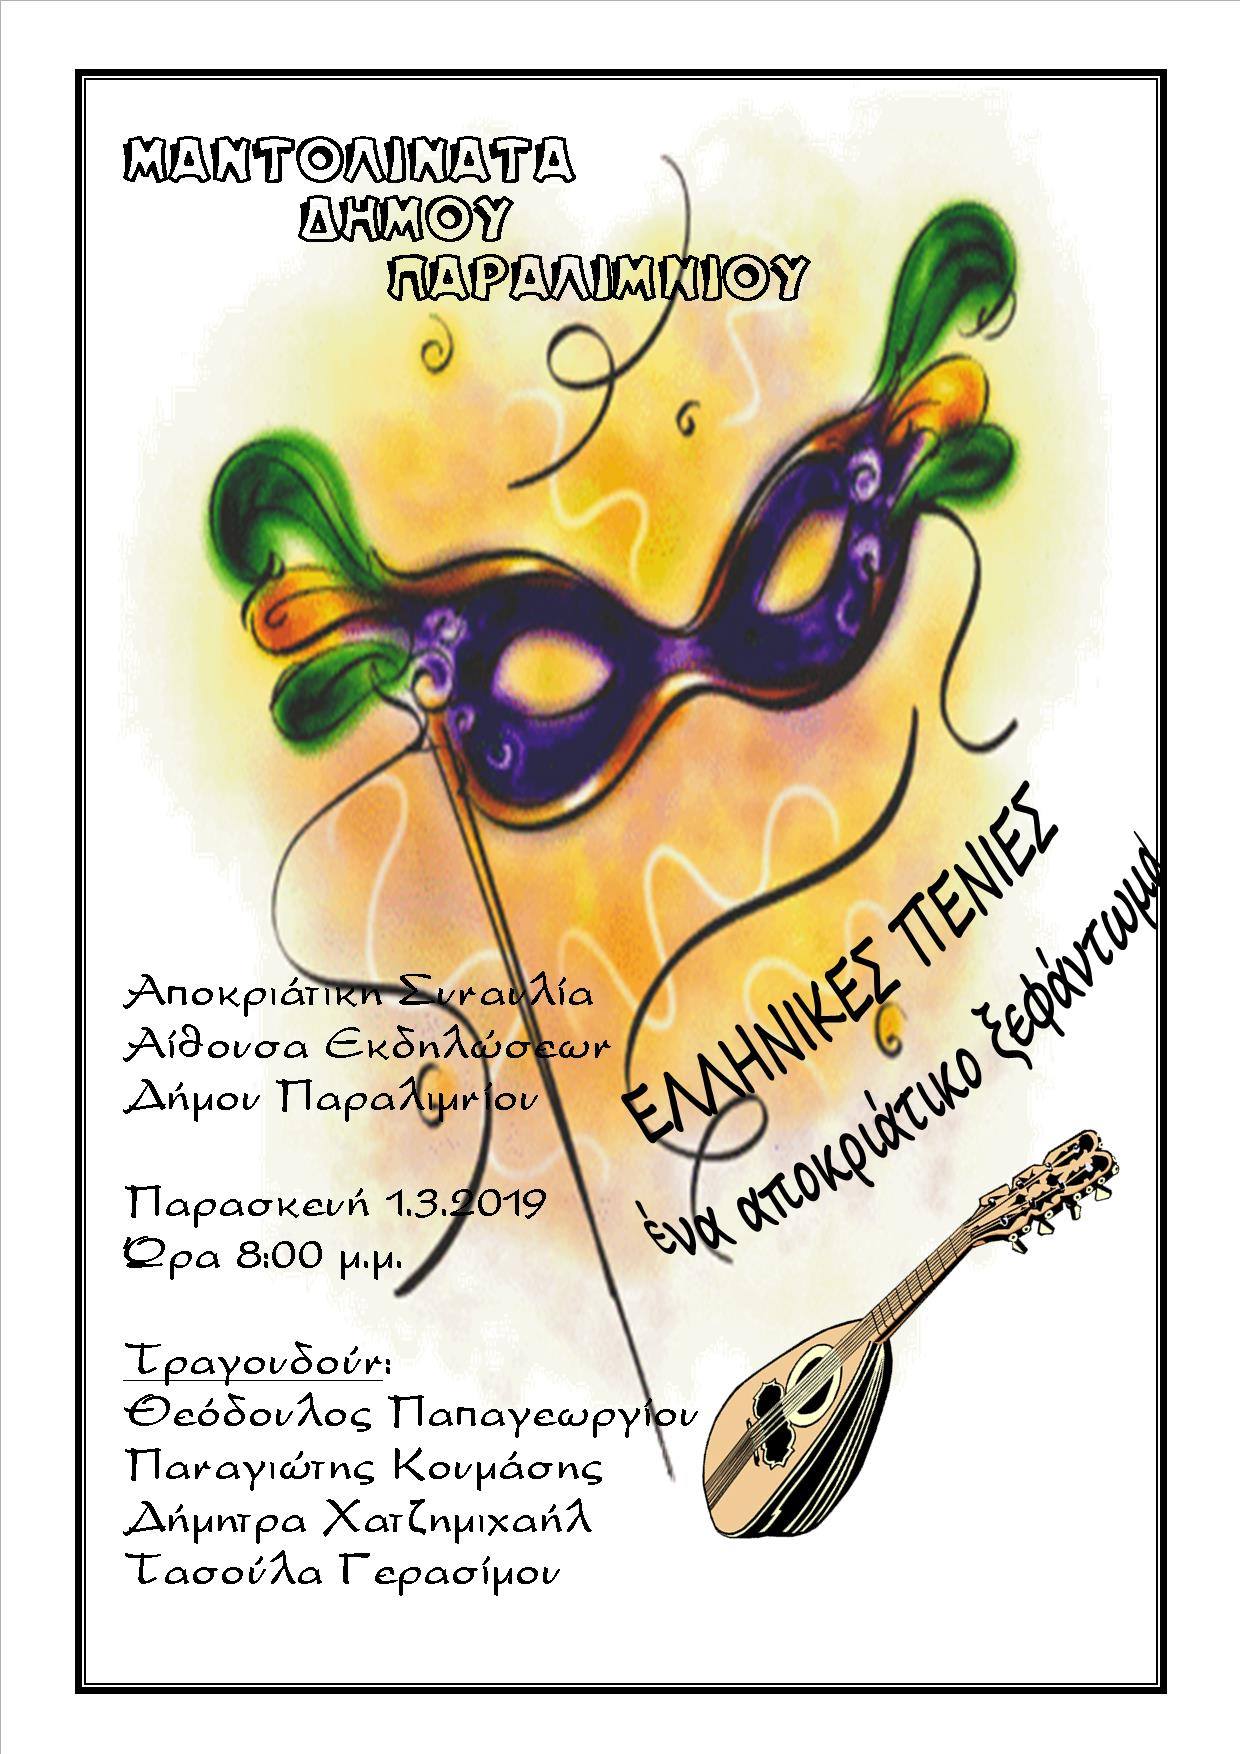 mandolinata CARNIVAL, Famagusta Carnival, Paralimni mandolinata, Music